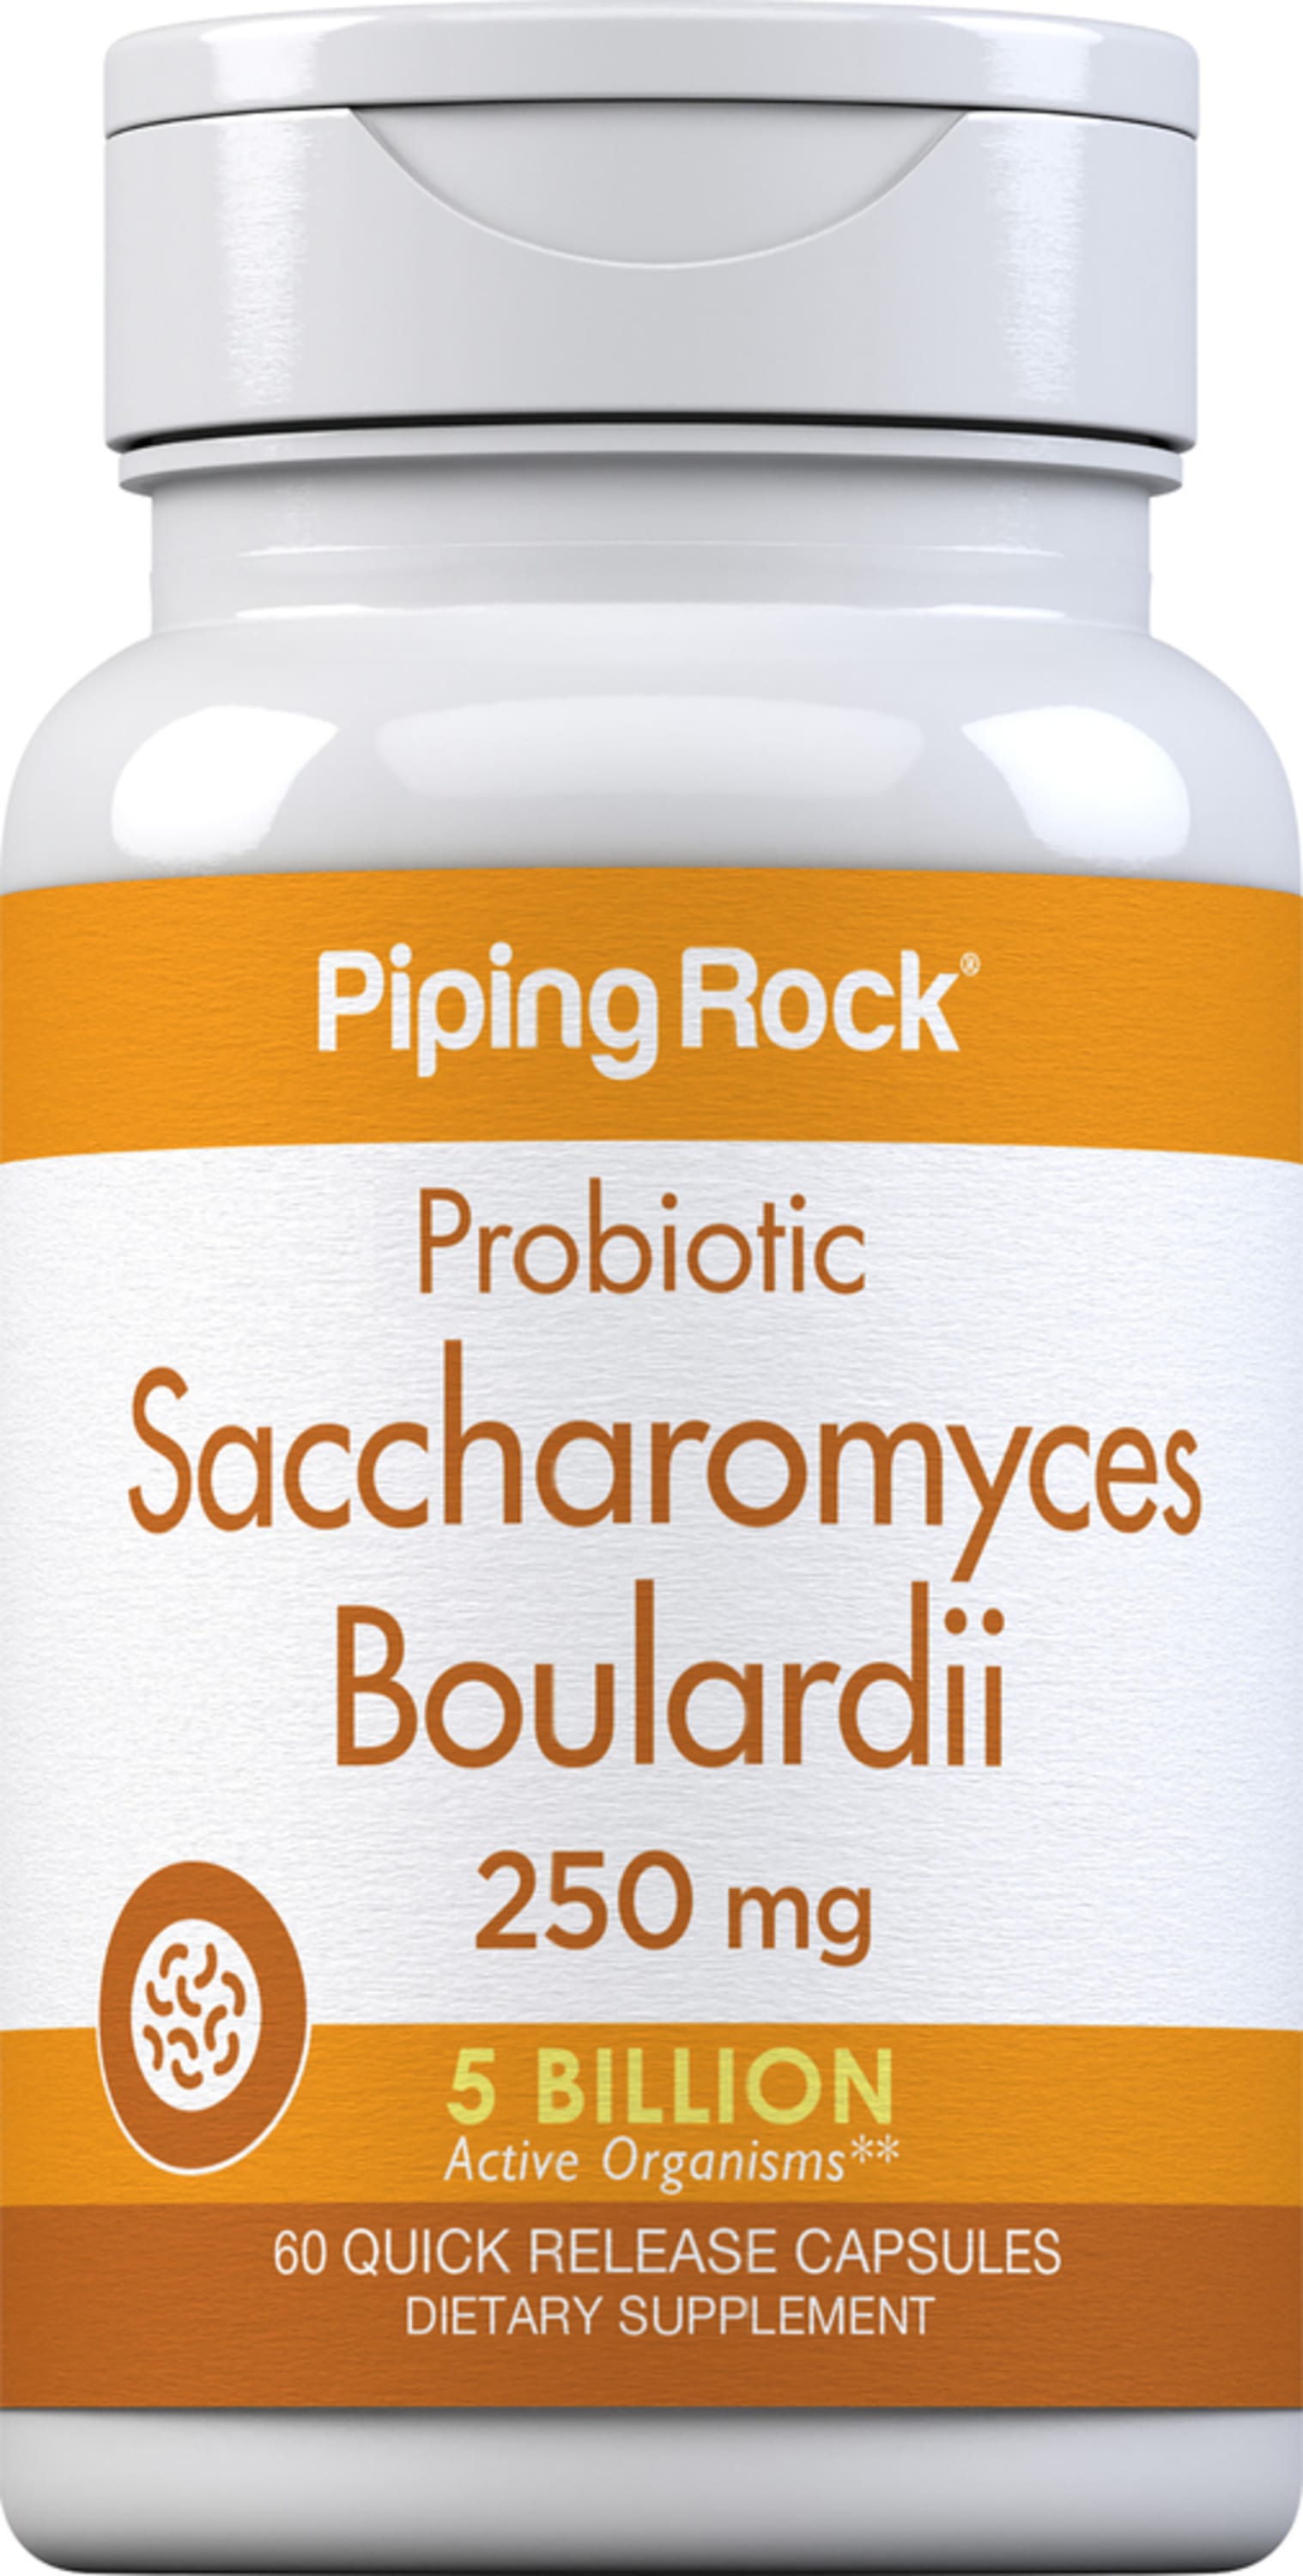 Saccharomyces Boulardii Capsules, Probiotic Saccharomyces Boulardii